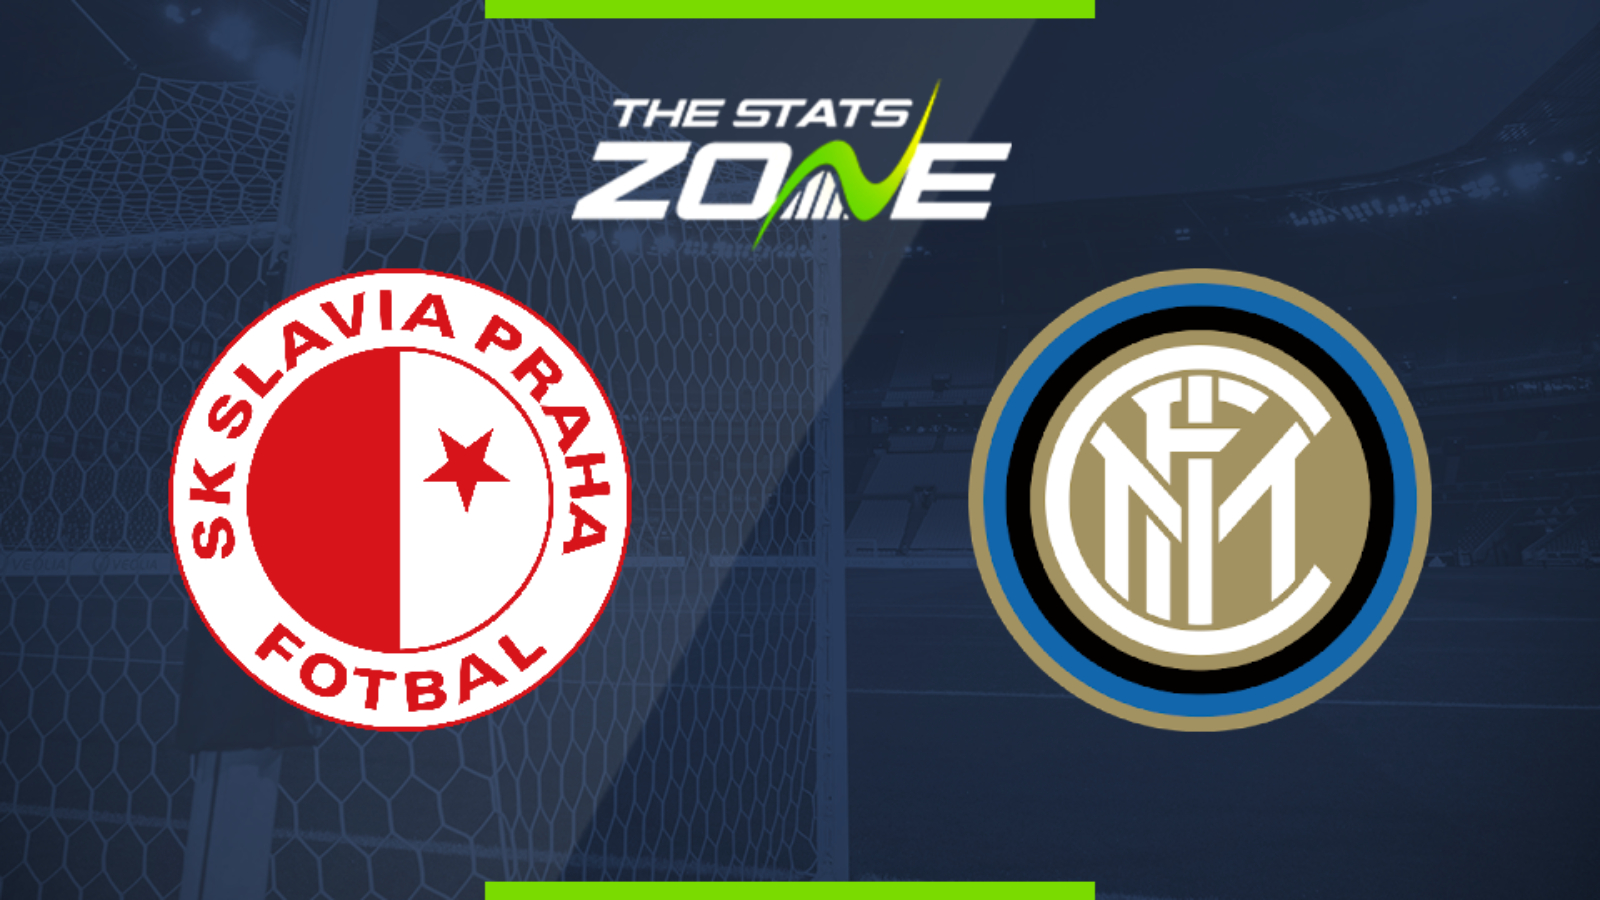 Inter Milan 1-1 Slavia Prague, UEFA Champions League 2019/20